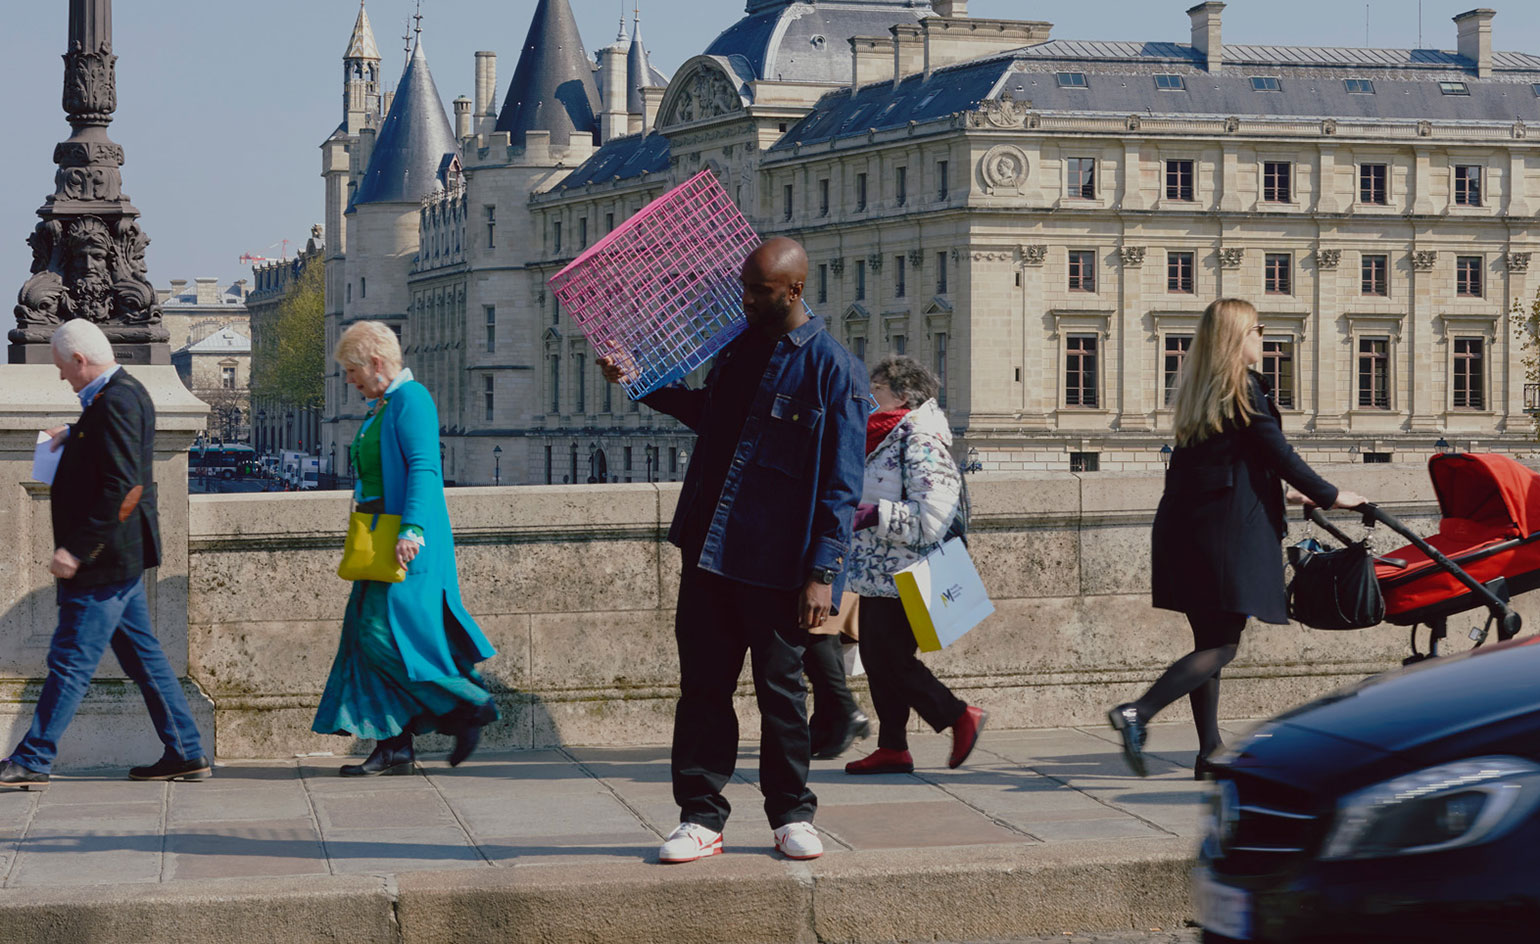 Virgil Abloh brings New York street life to Paris in Louis Vuitton